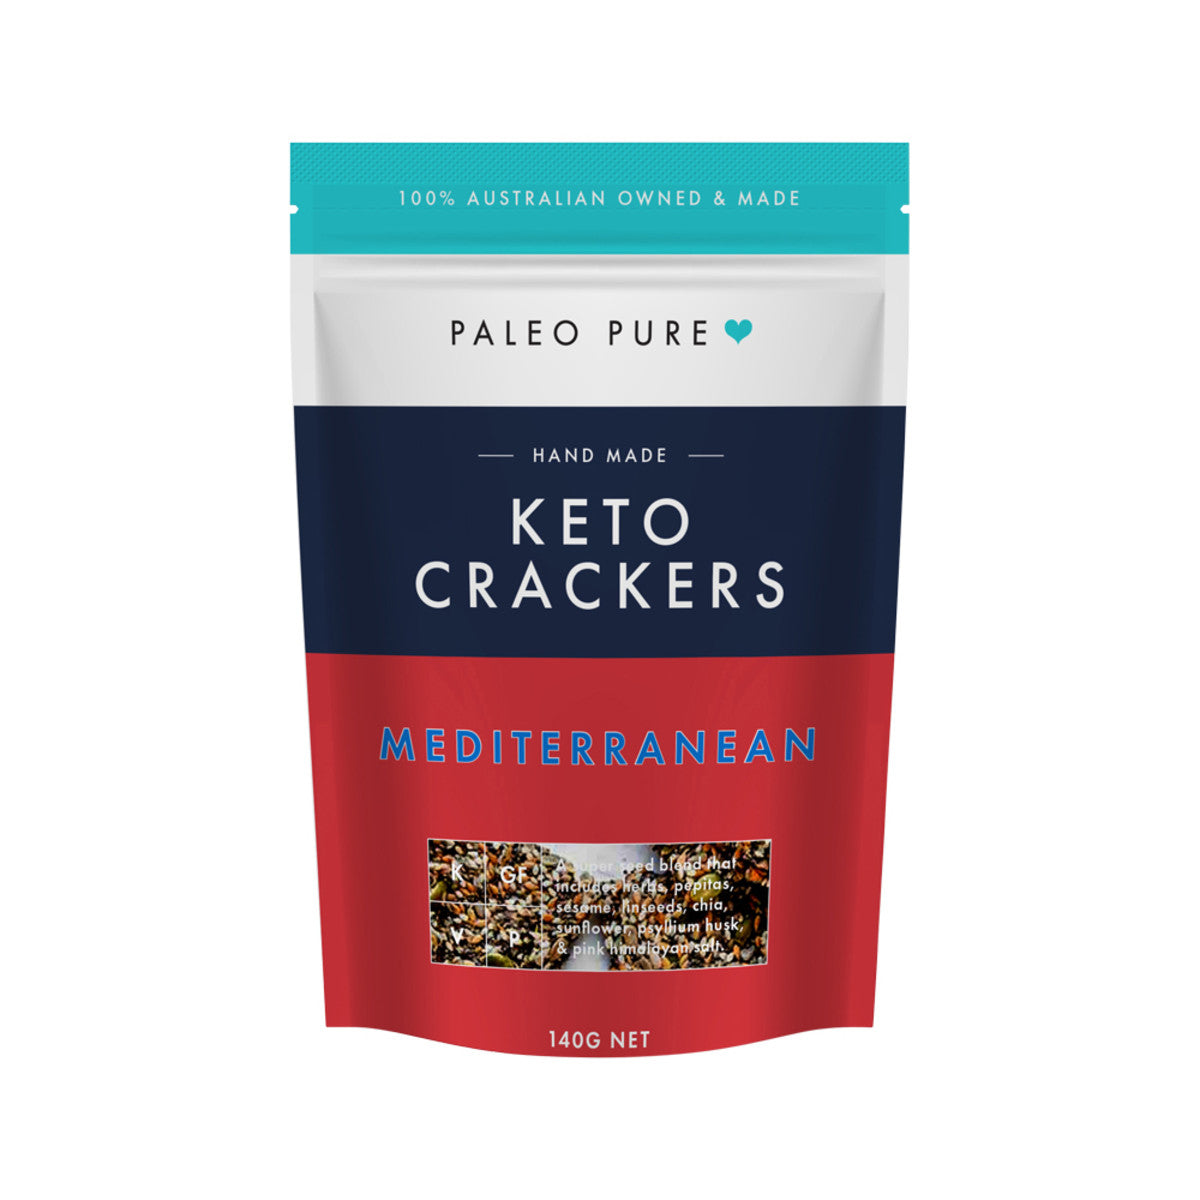 Paleo Pure Keto Crackers 140gm, Mediterranean Flavour